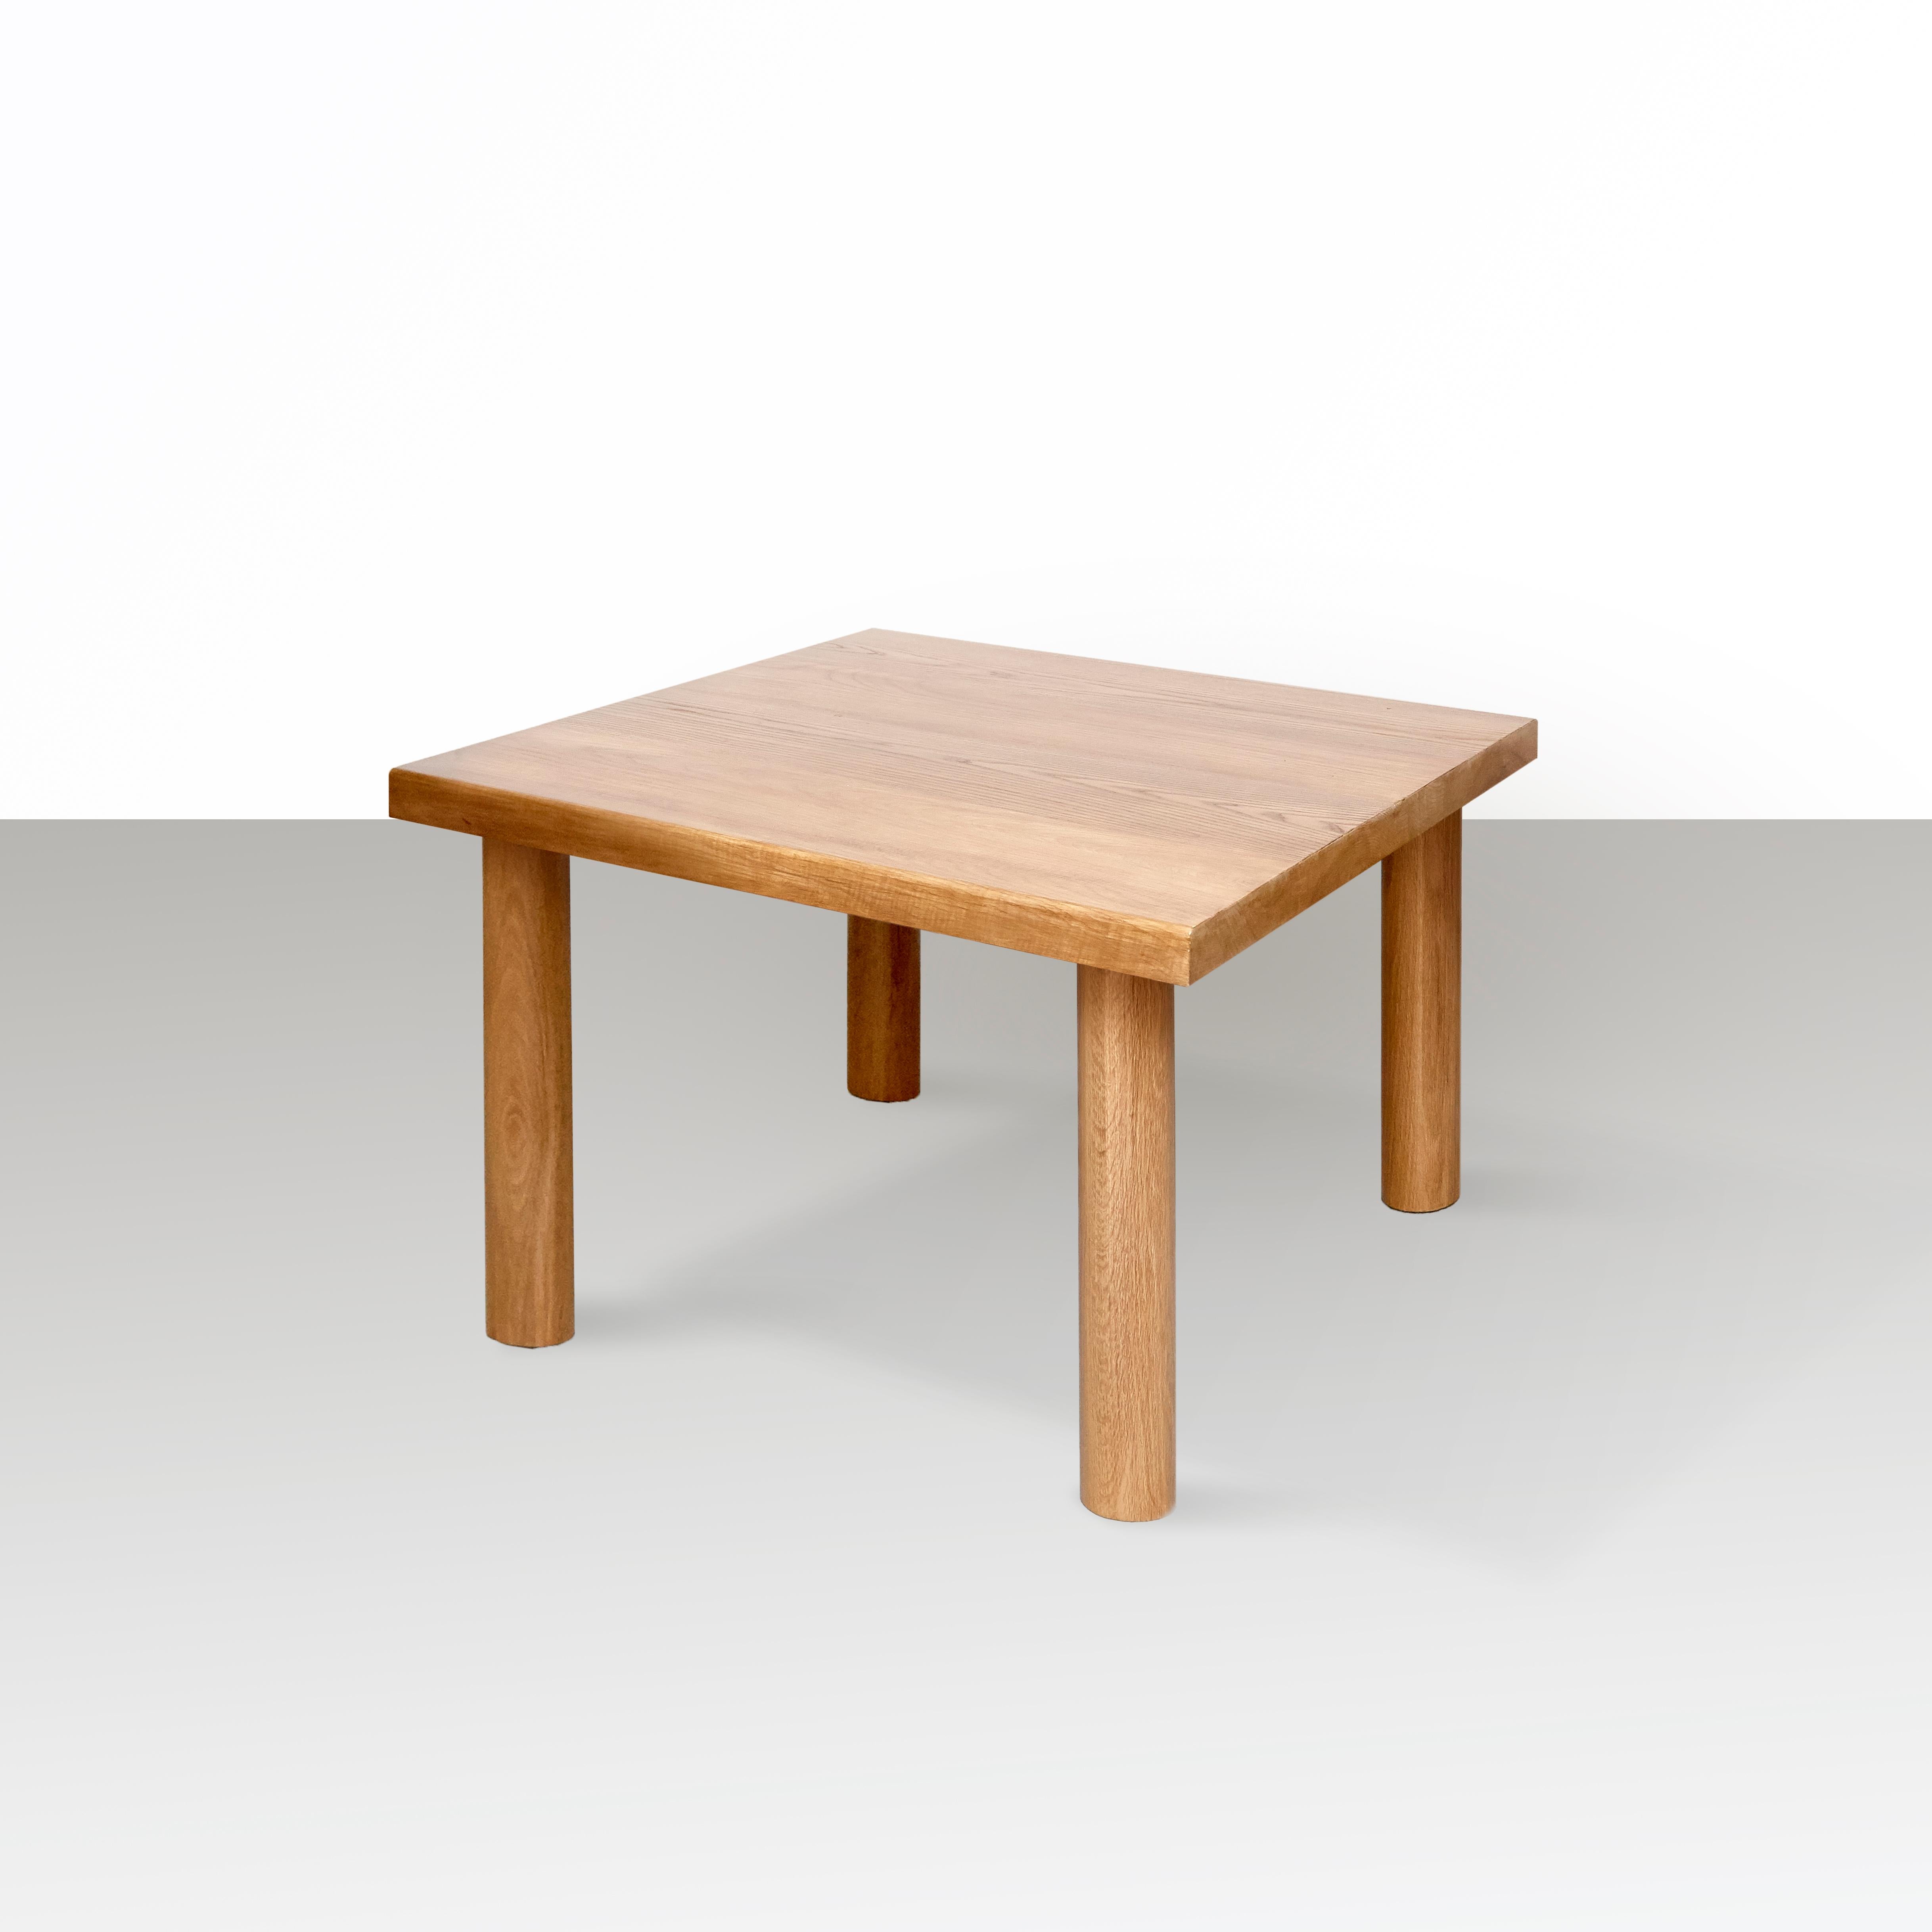 Spanish Dada Est. Contemporary Solid Ash Table